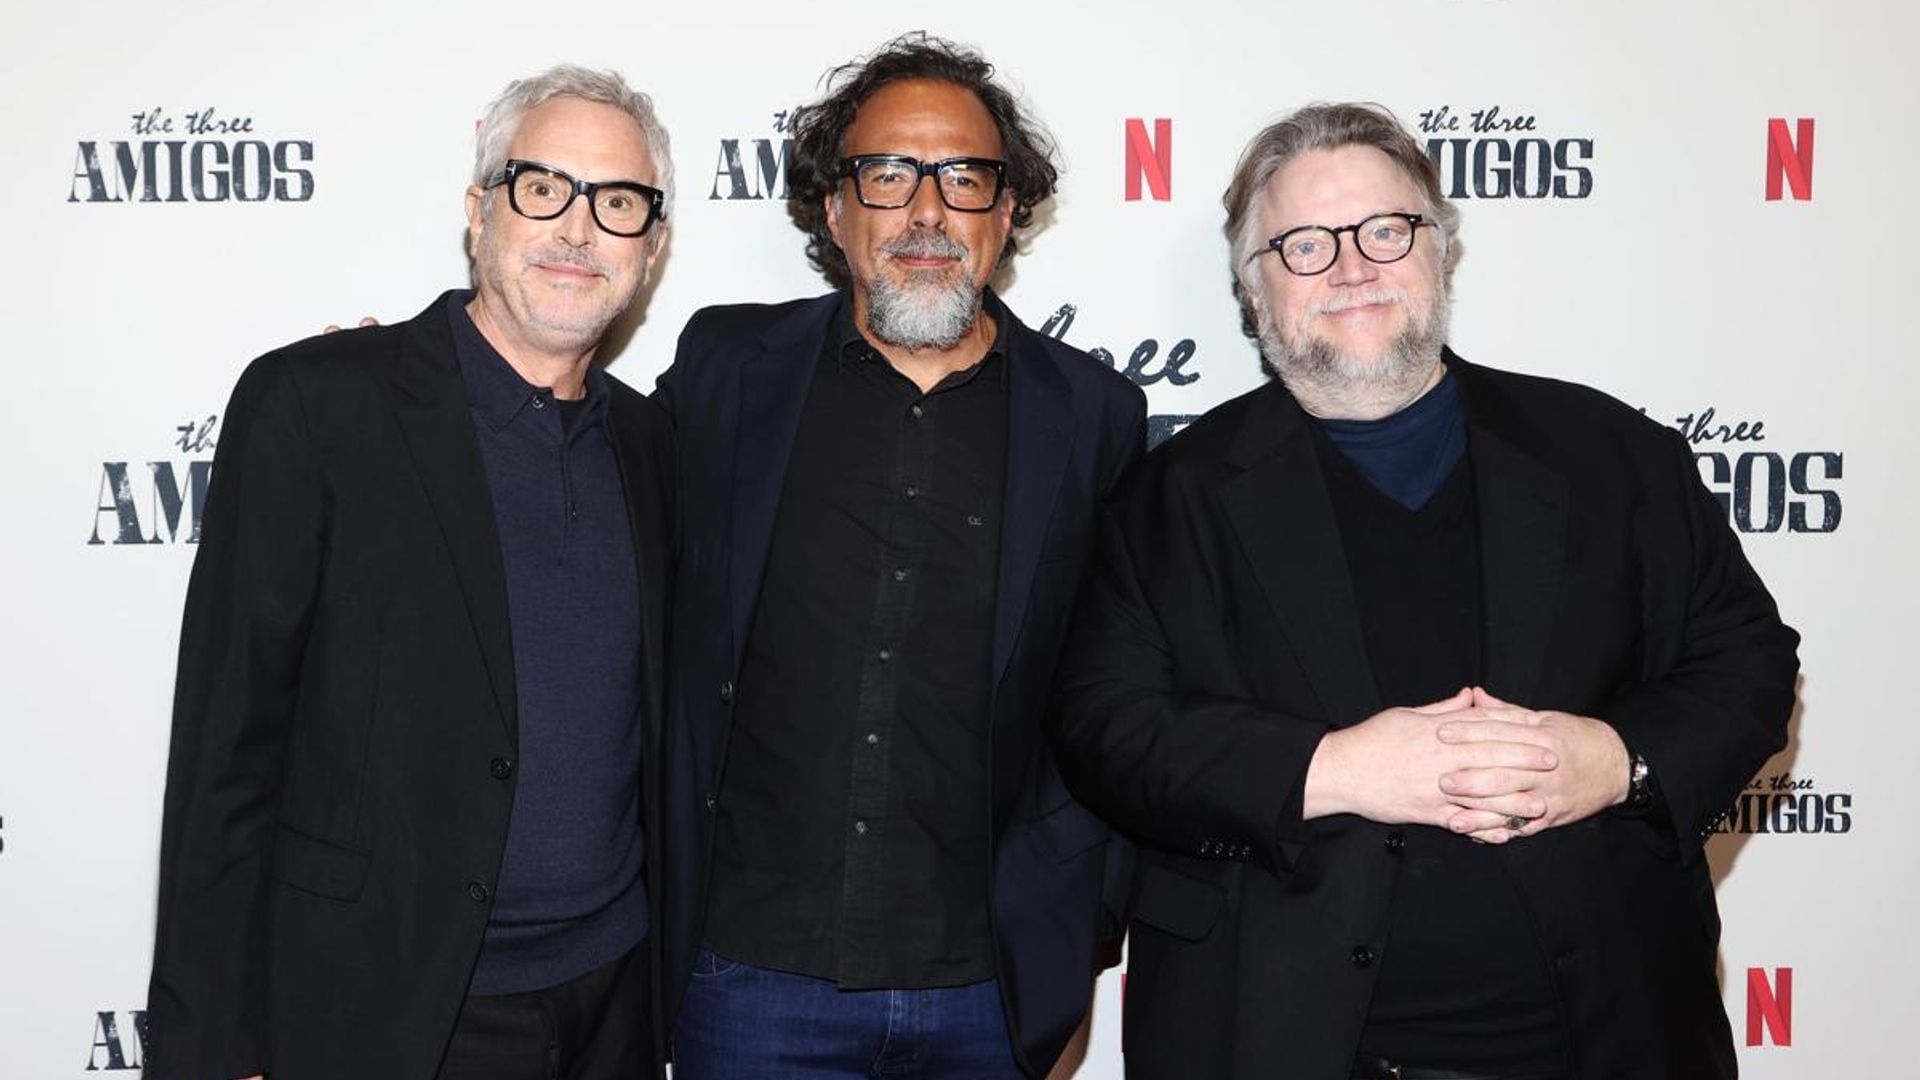 Alfonso Cuarón, Guillermo del Toro, and Alejandro Iñárritu say traditional cinema isn’t over despite streaming services’ popularity